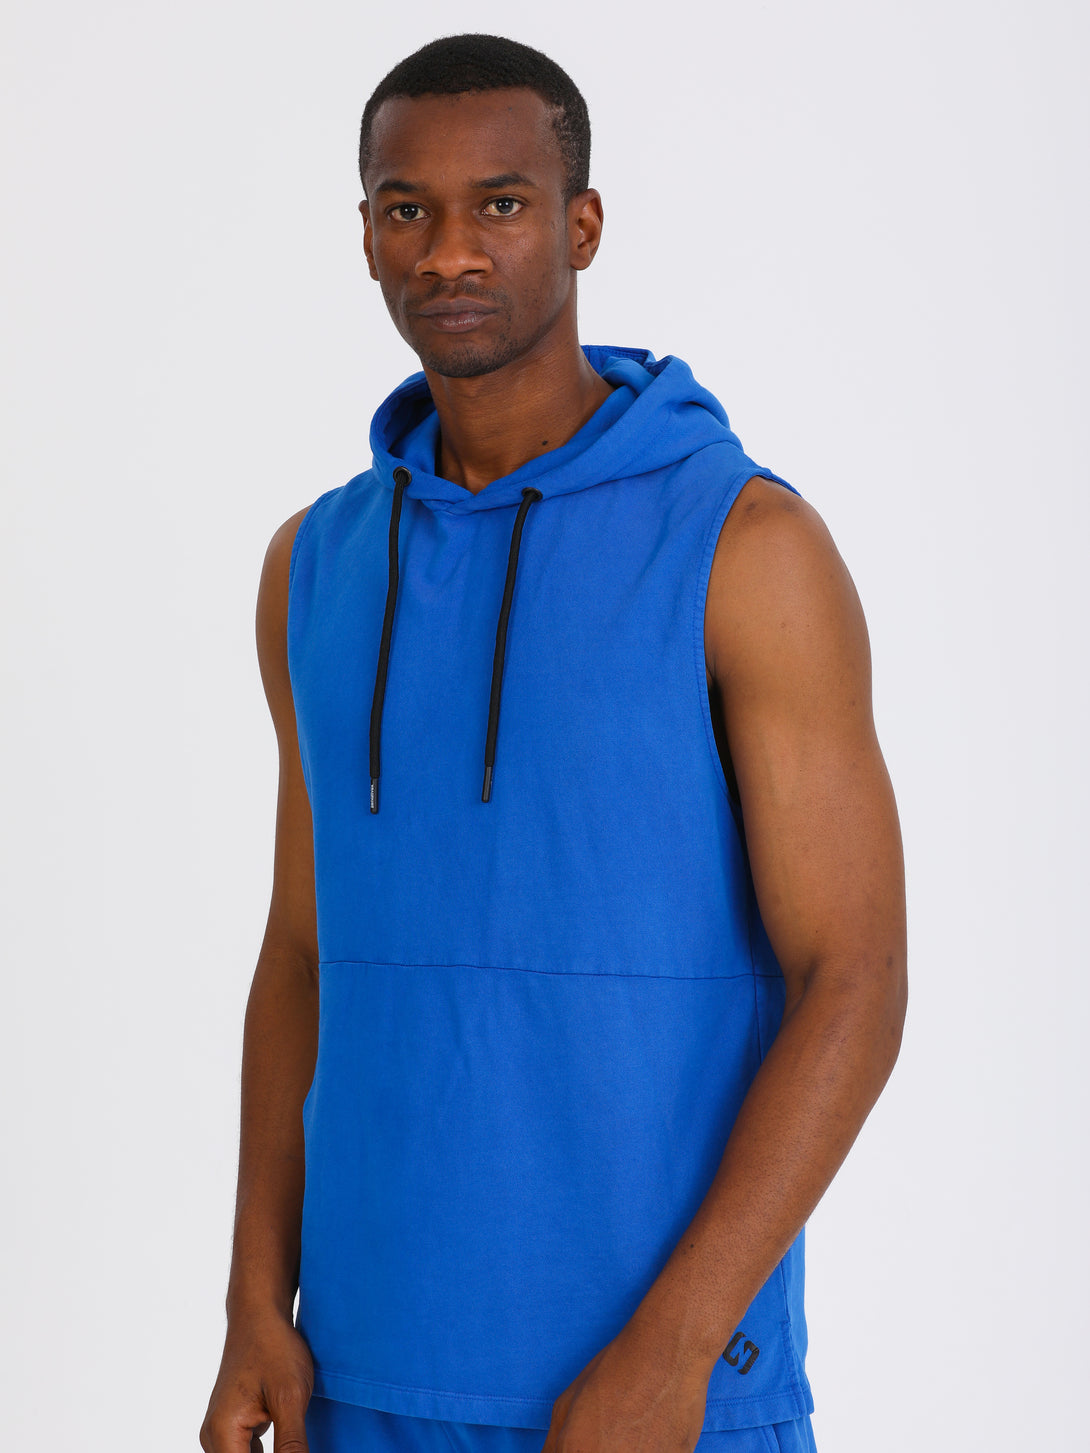 A Men Wearing Lapis Blue The Basic Hooded Vest